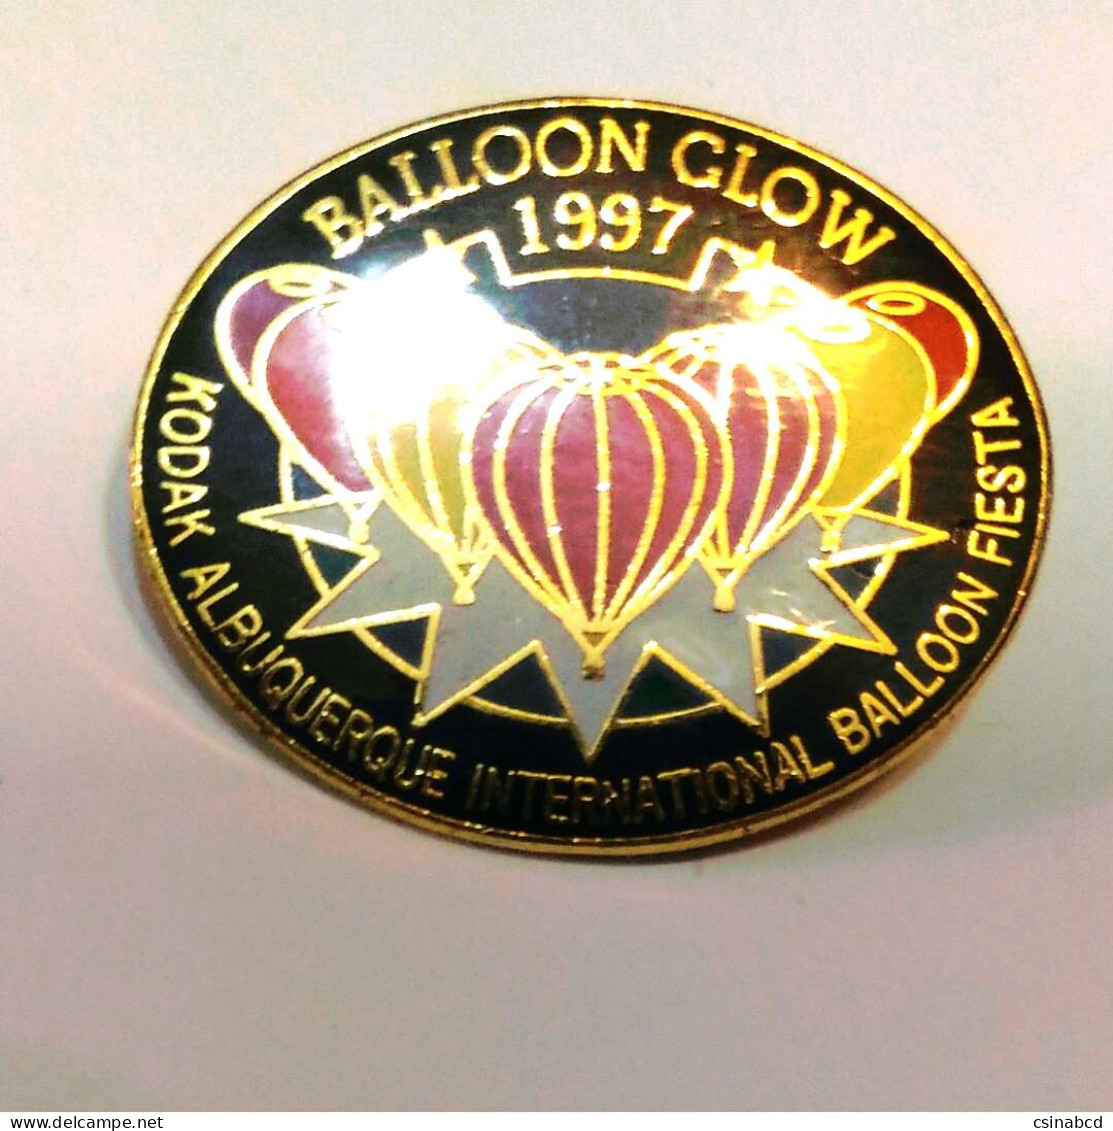 1997 Kodak Albuquerque BALLOON GLOW International Balloon Fiesta AIBF Hot Air Ballon Pin Badge - Transportation